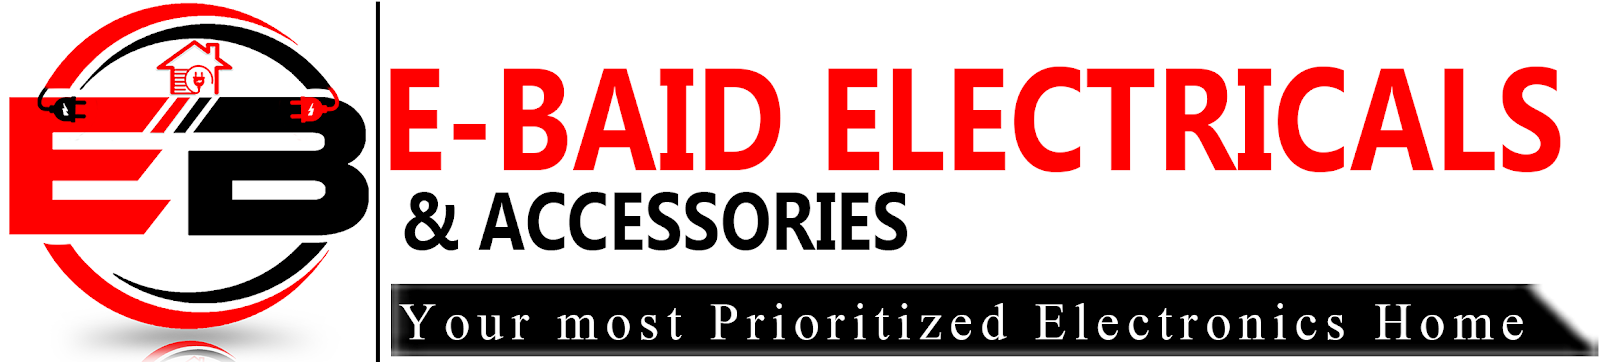 E-BAID ELECTRICALS